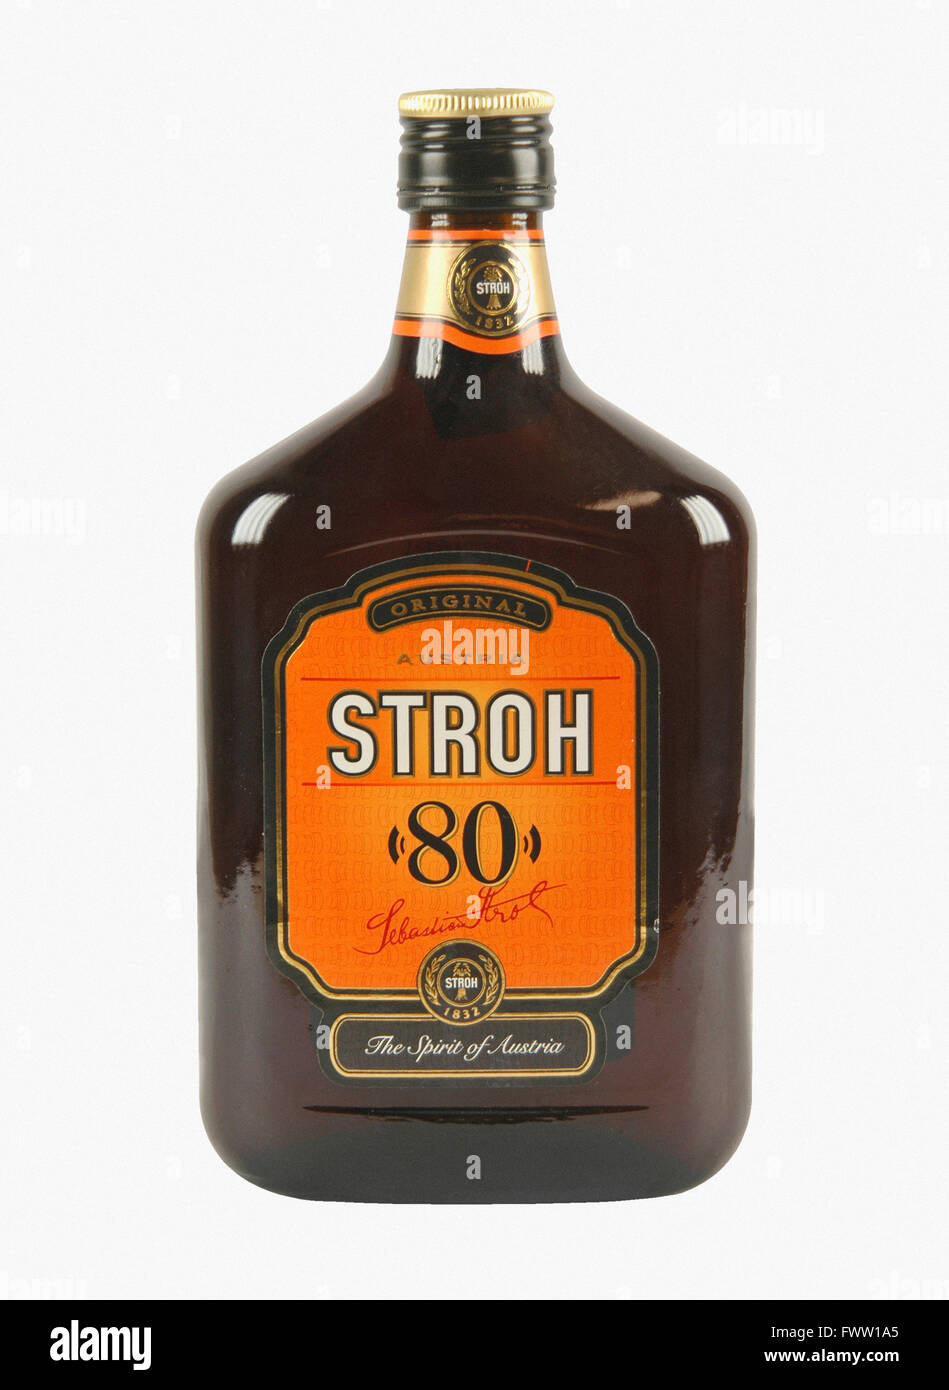 Stroh 80 Rum bottle Stock Photo